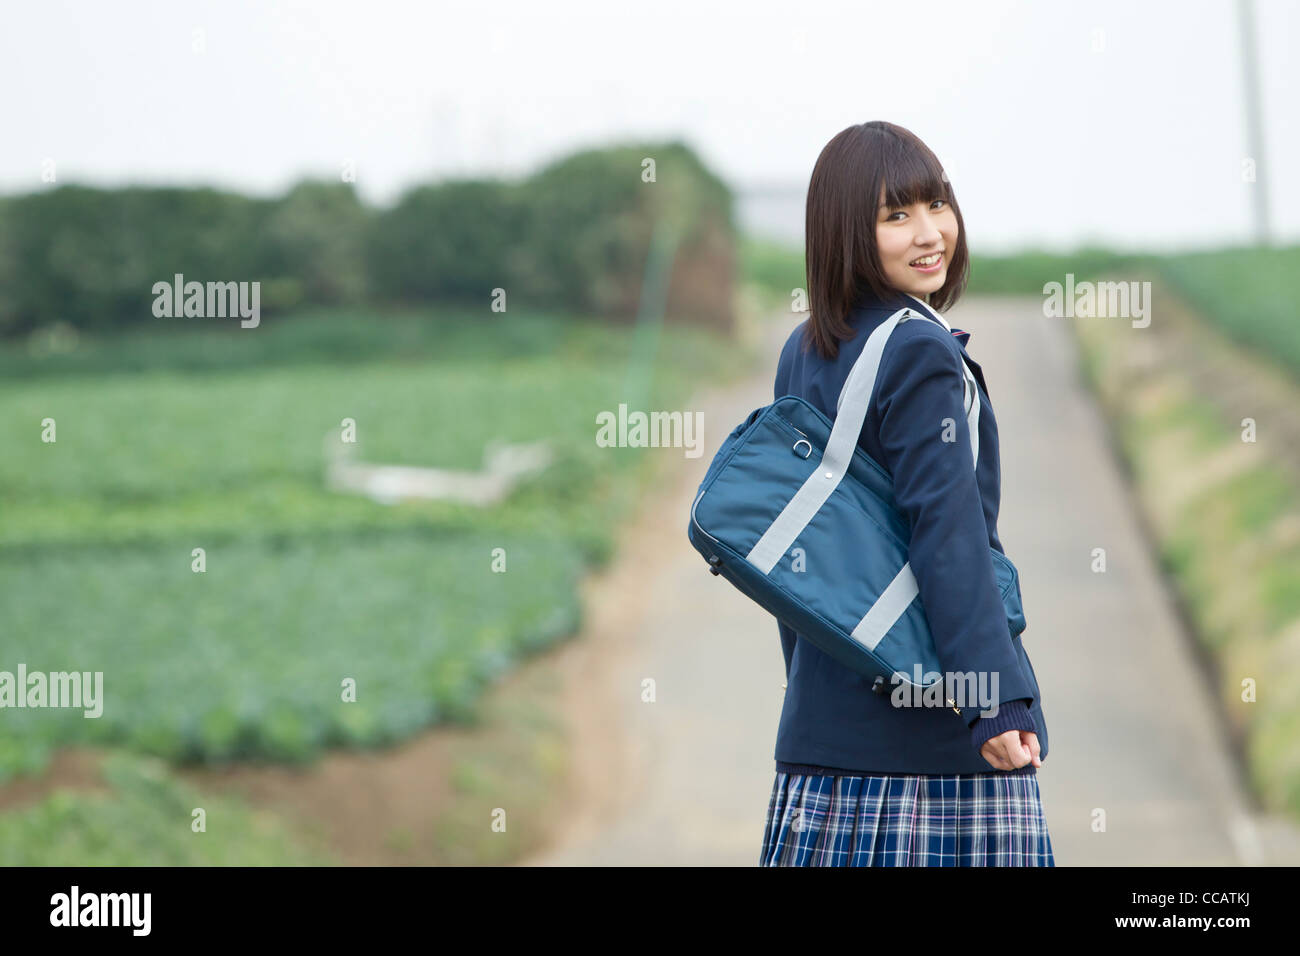 High school girl standing on rural road Stock Photo